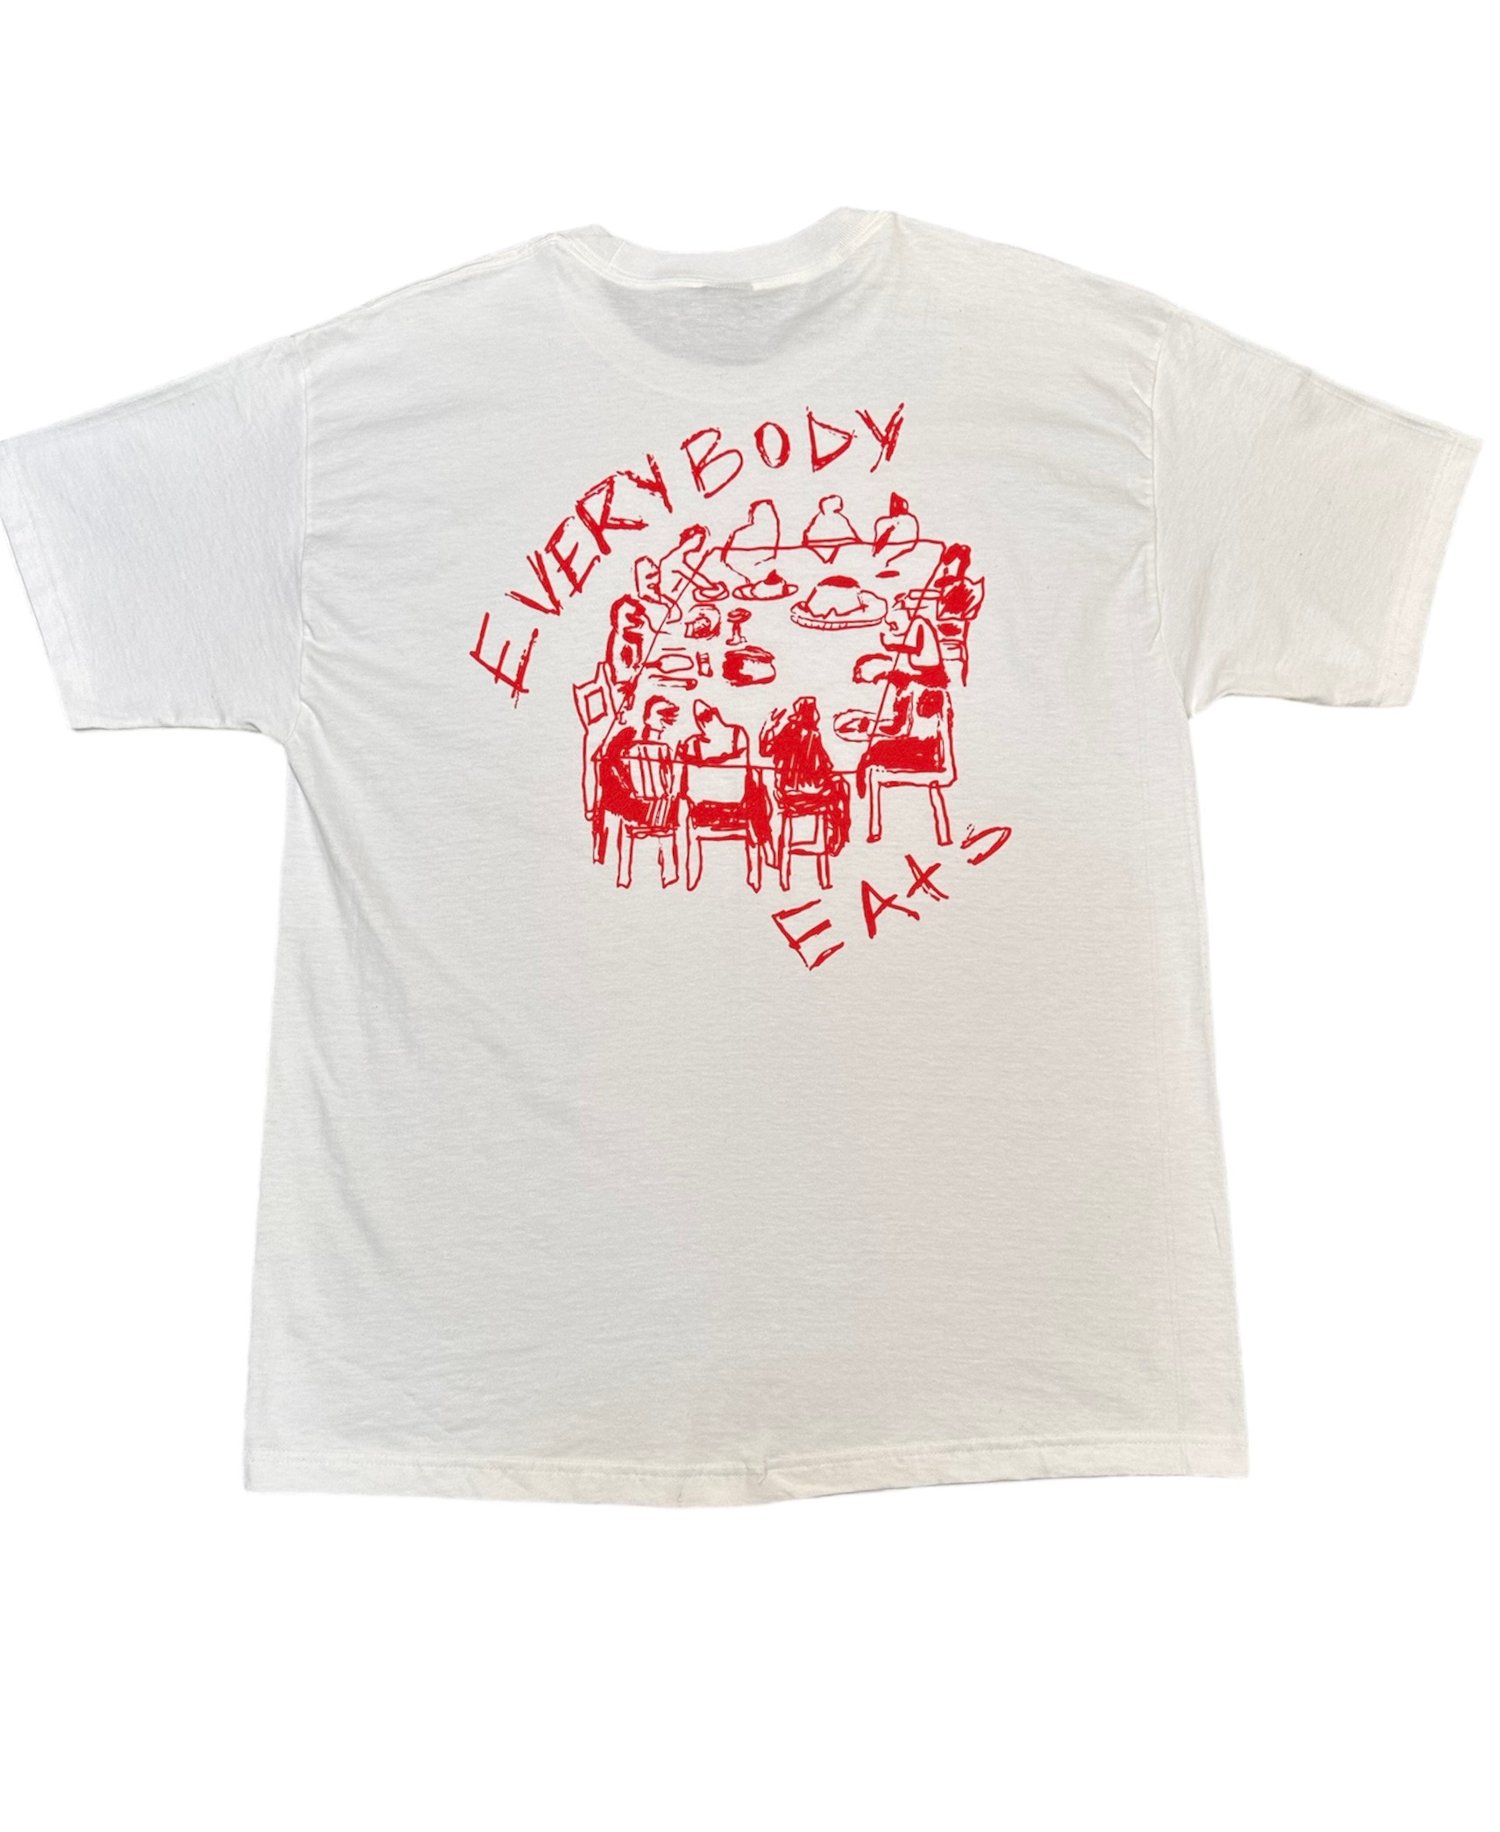 Image of "Everybody Eats" T-Shirt